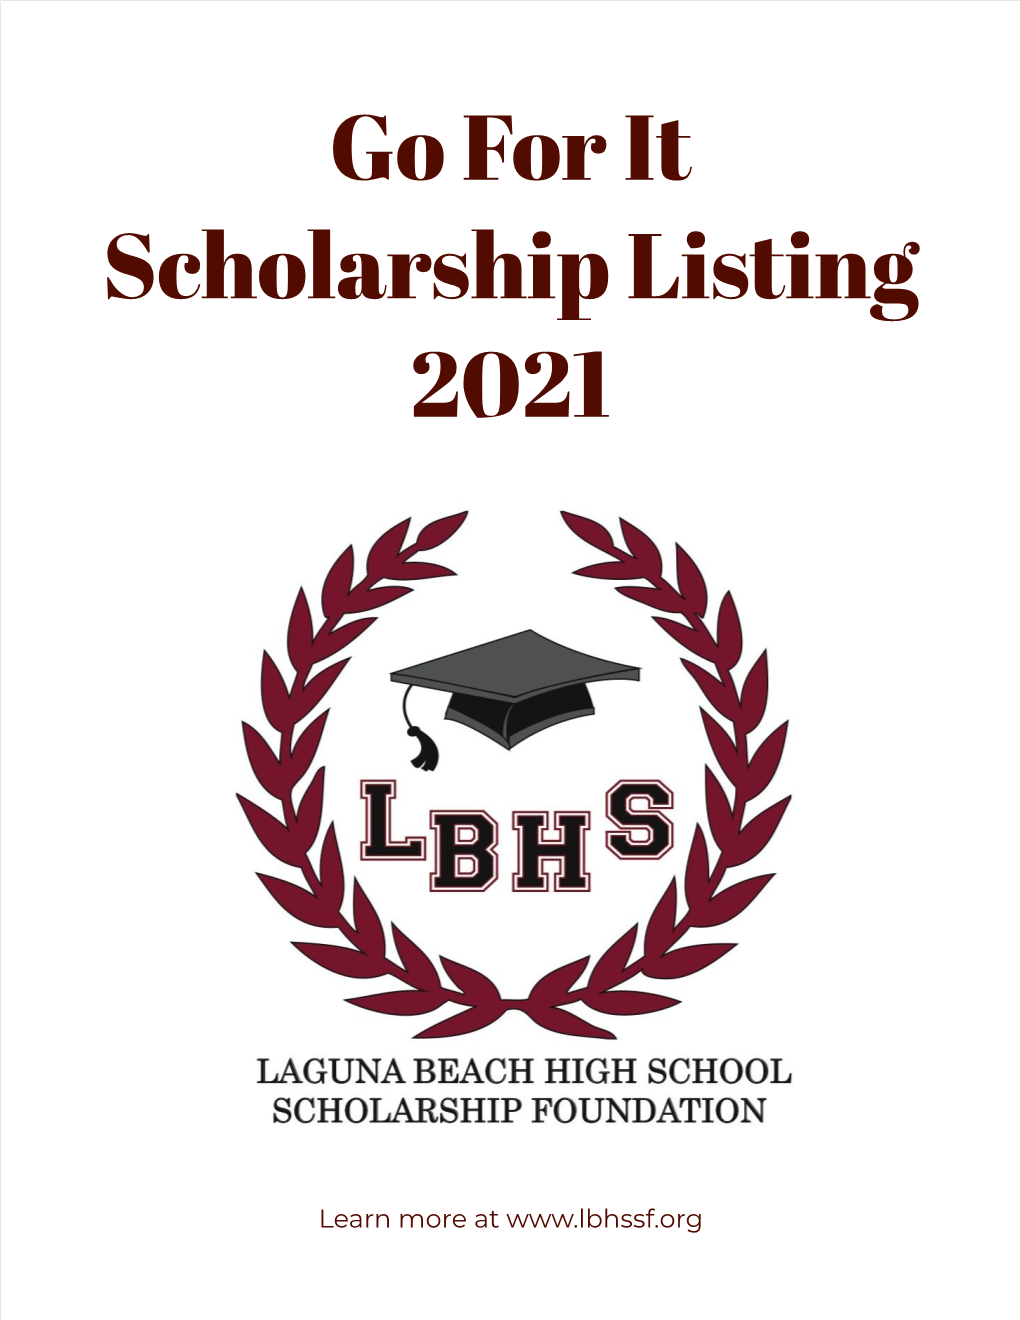 Scholarship Goforit Listing 2021